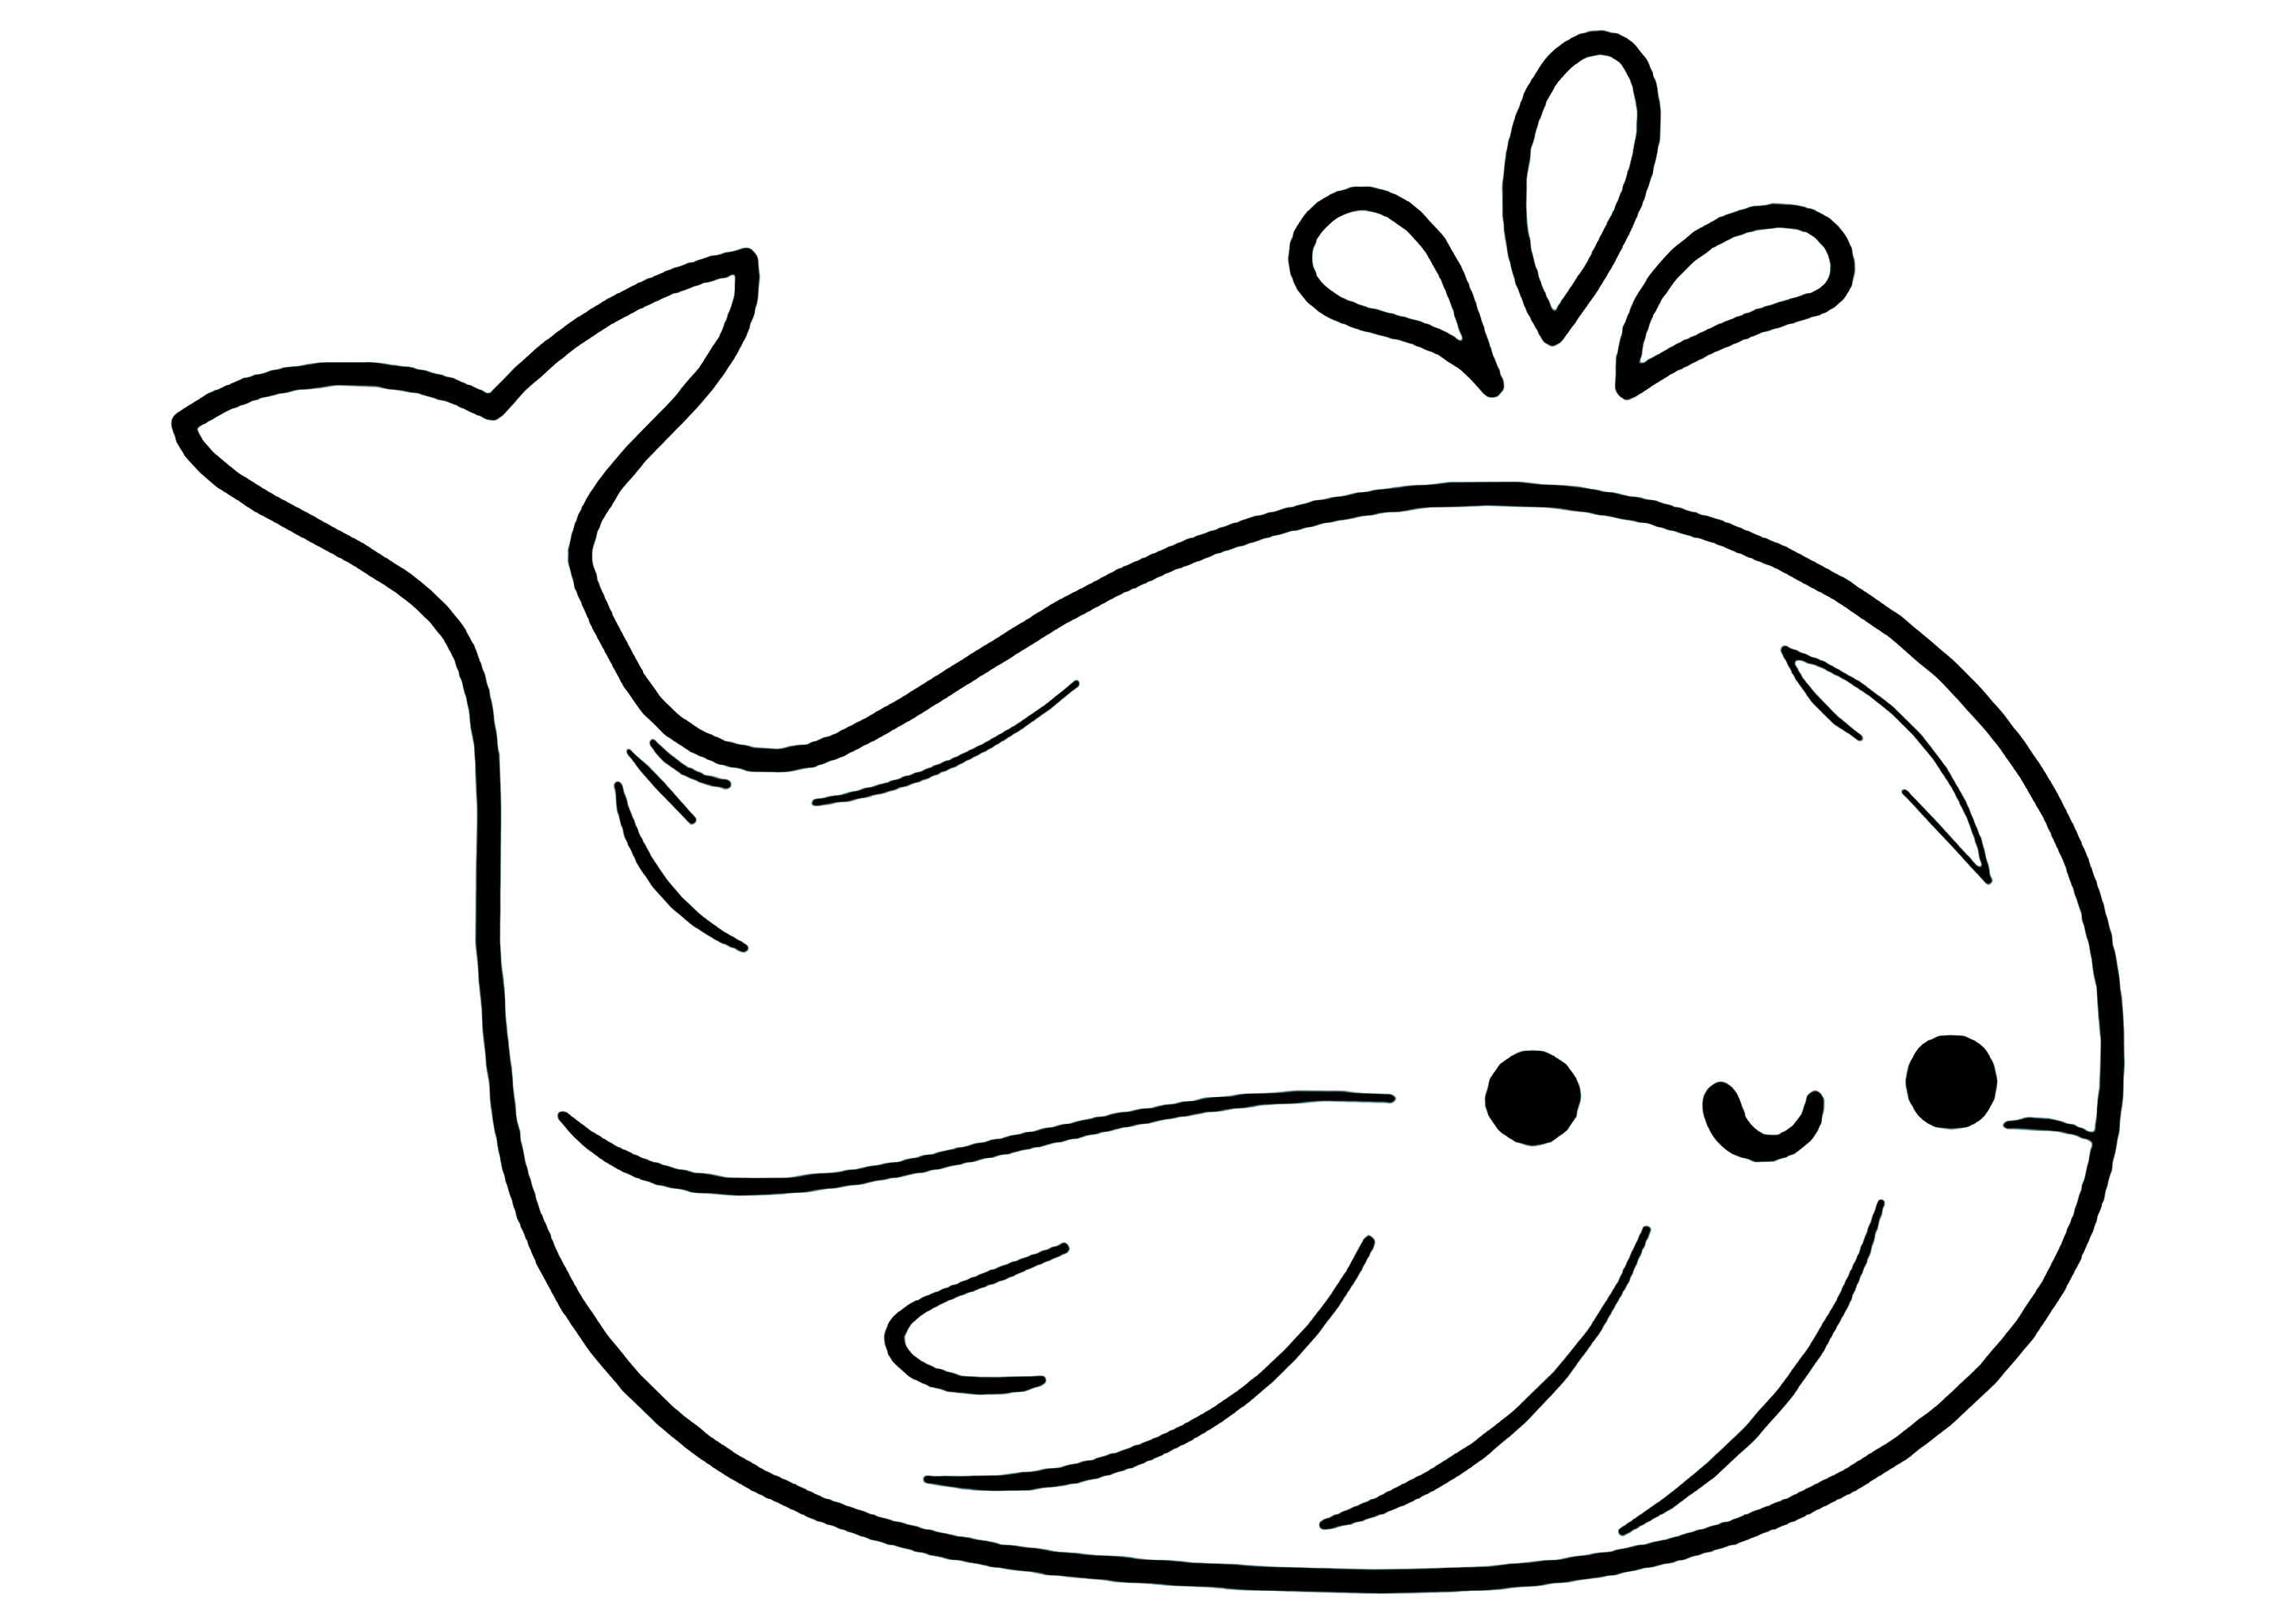 Cute whale drawn in Kawaii style